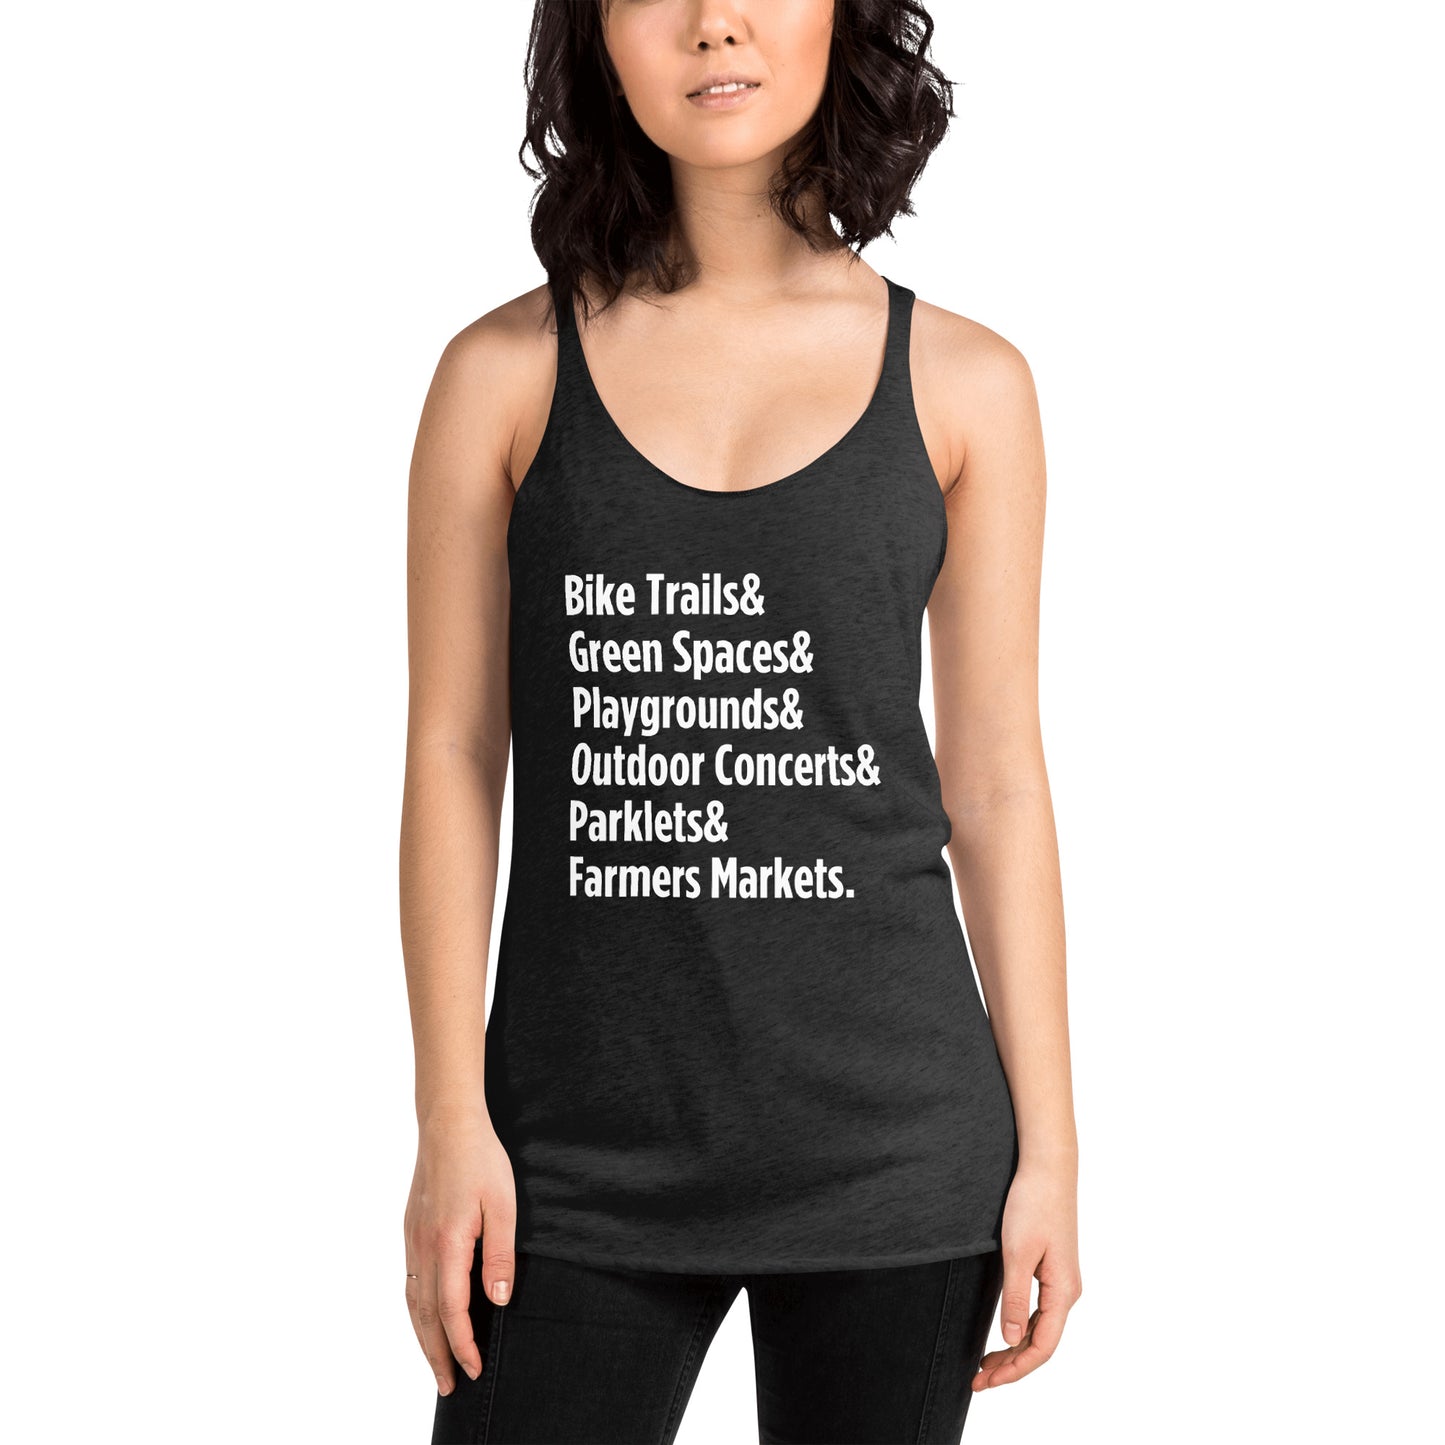 "Only on Main Street" (Greenspaces) Women's Racerback Tank